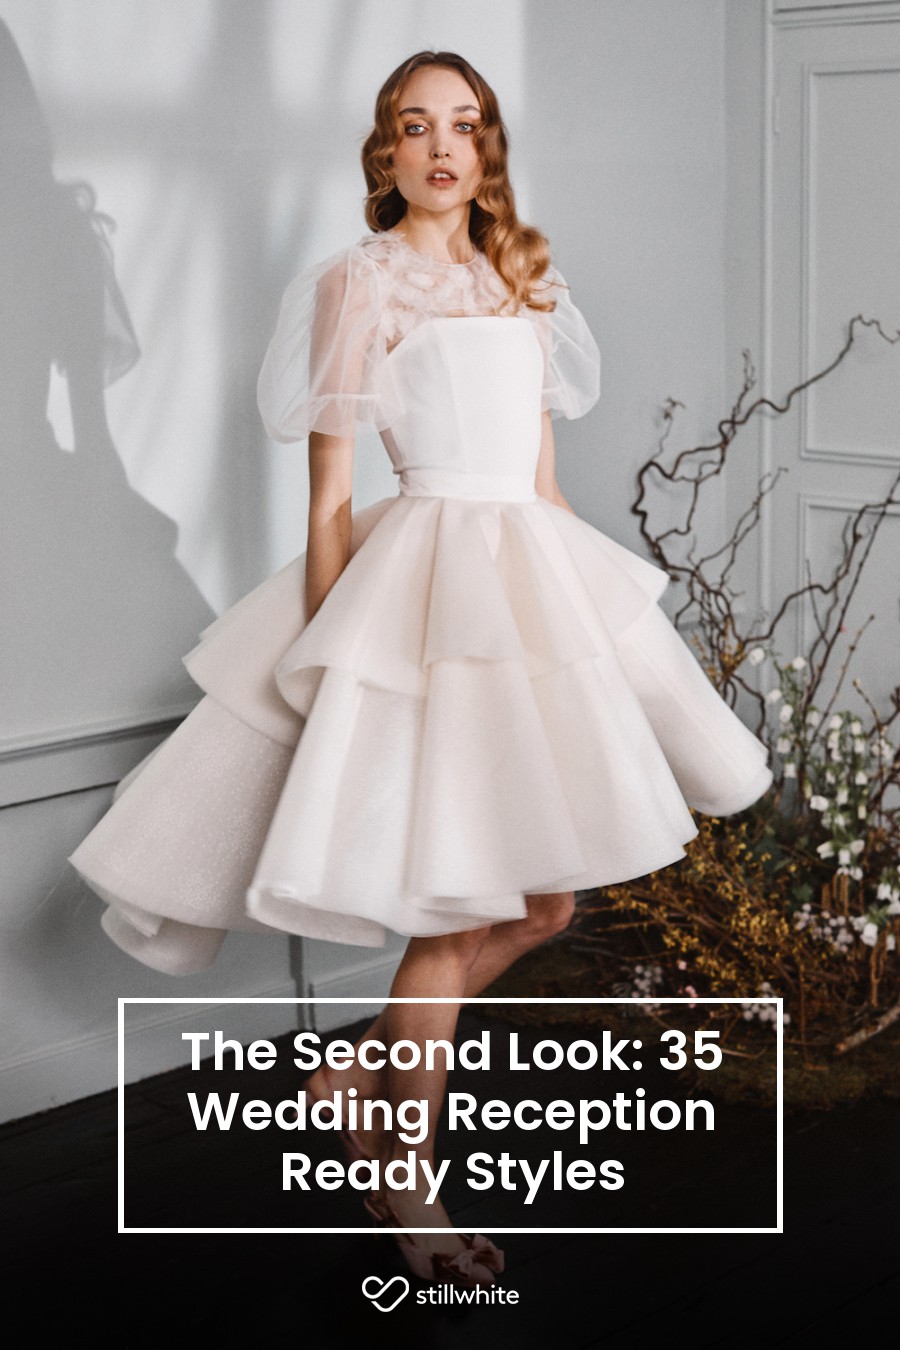 The Second Look: 35 Wedding Reception Ready Styles – Stillwhite Blog